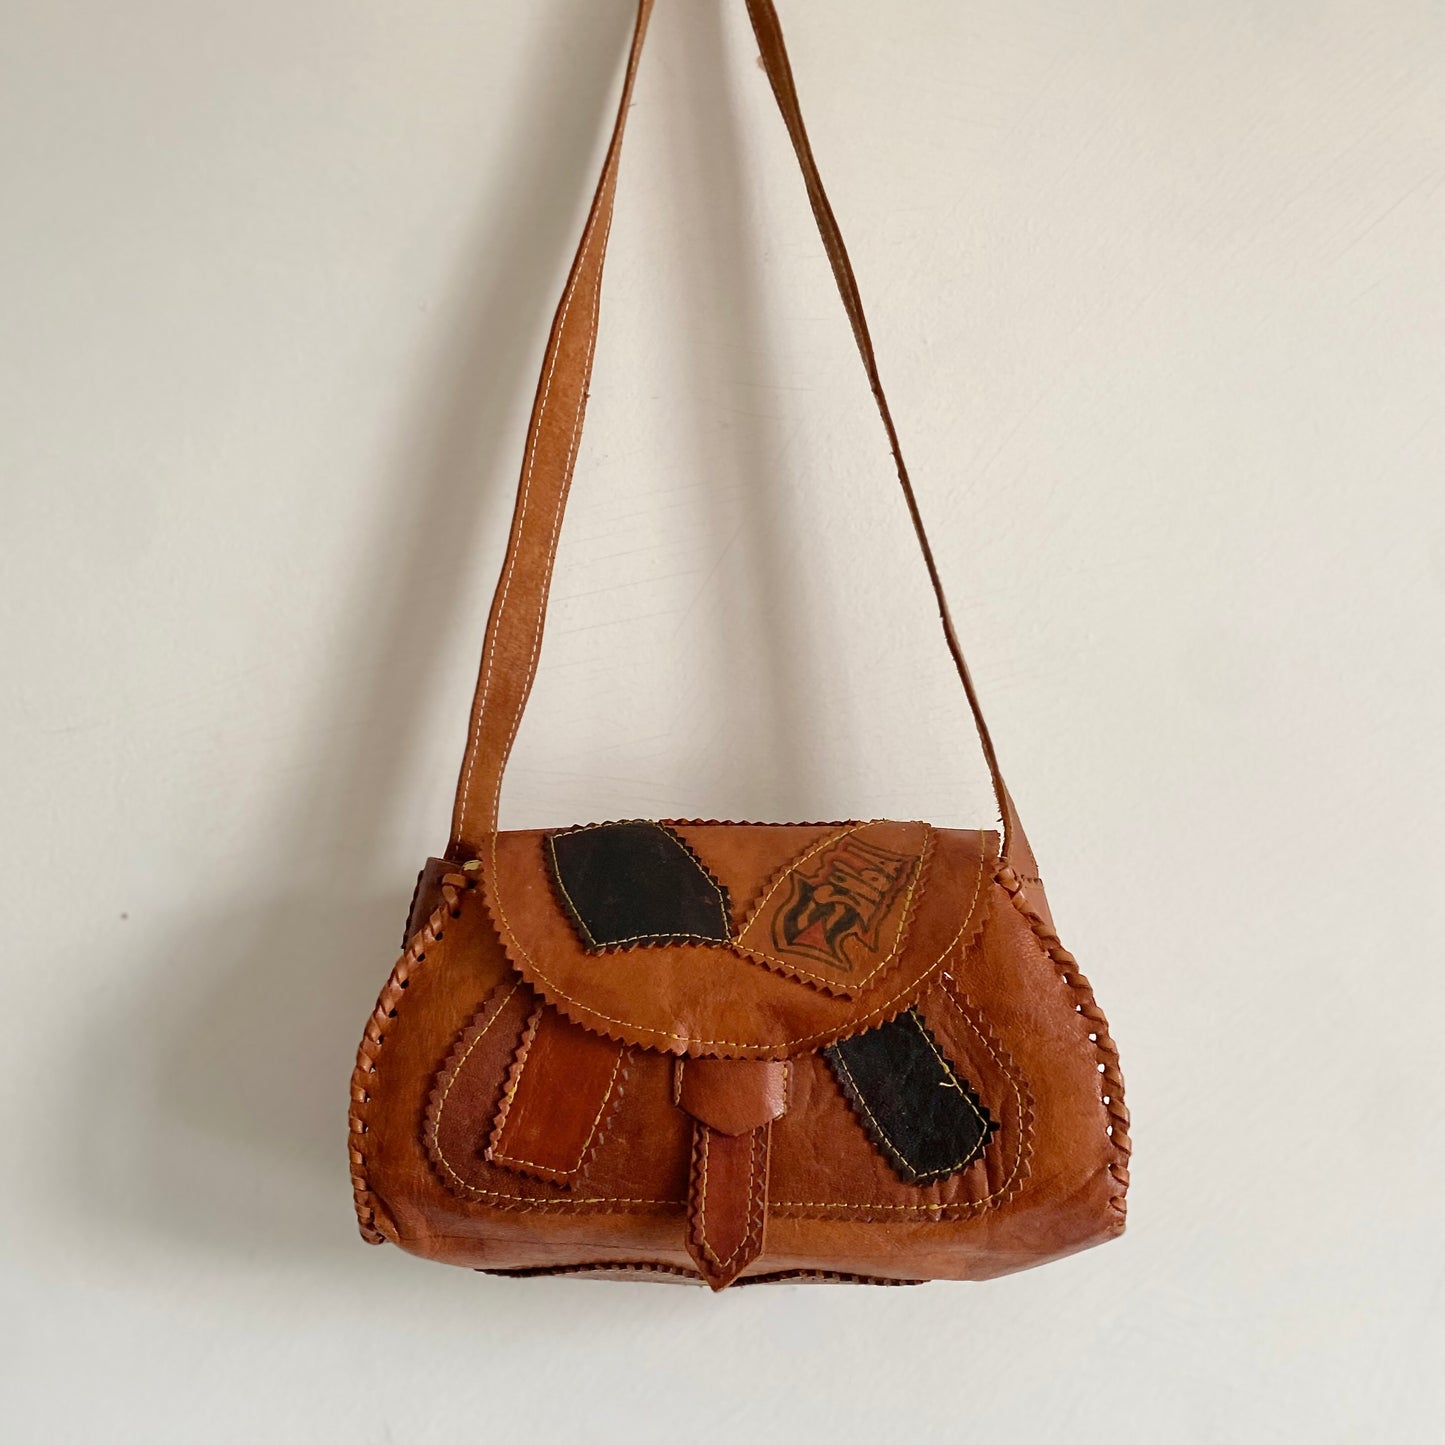 Small Tan Leather Bag